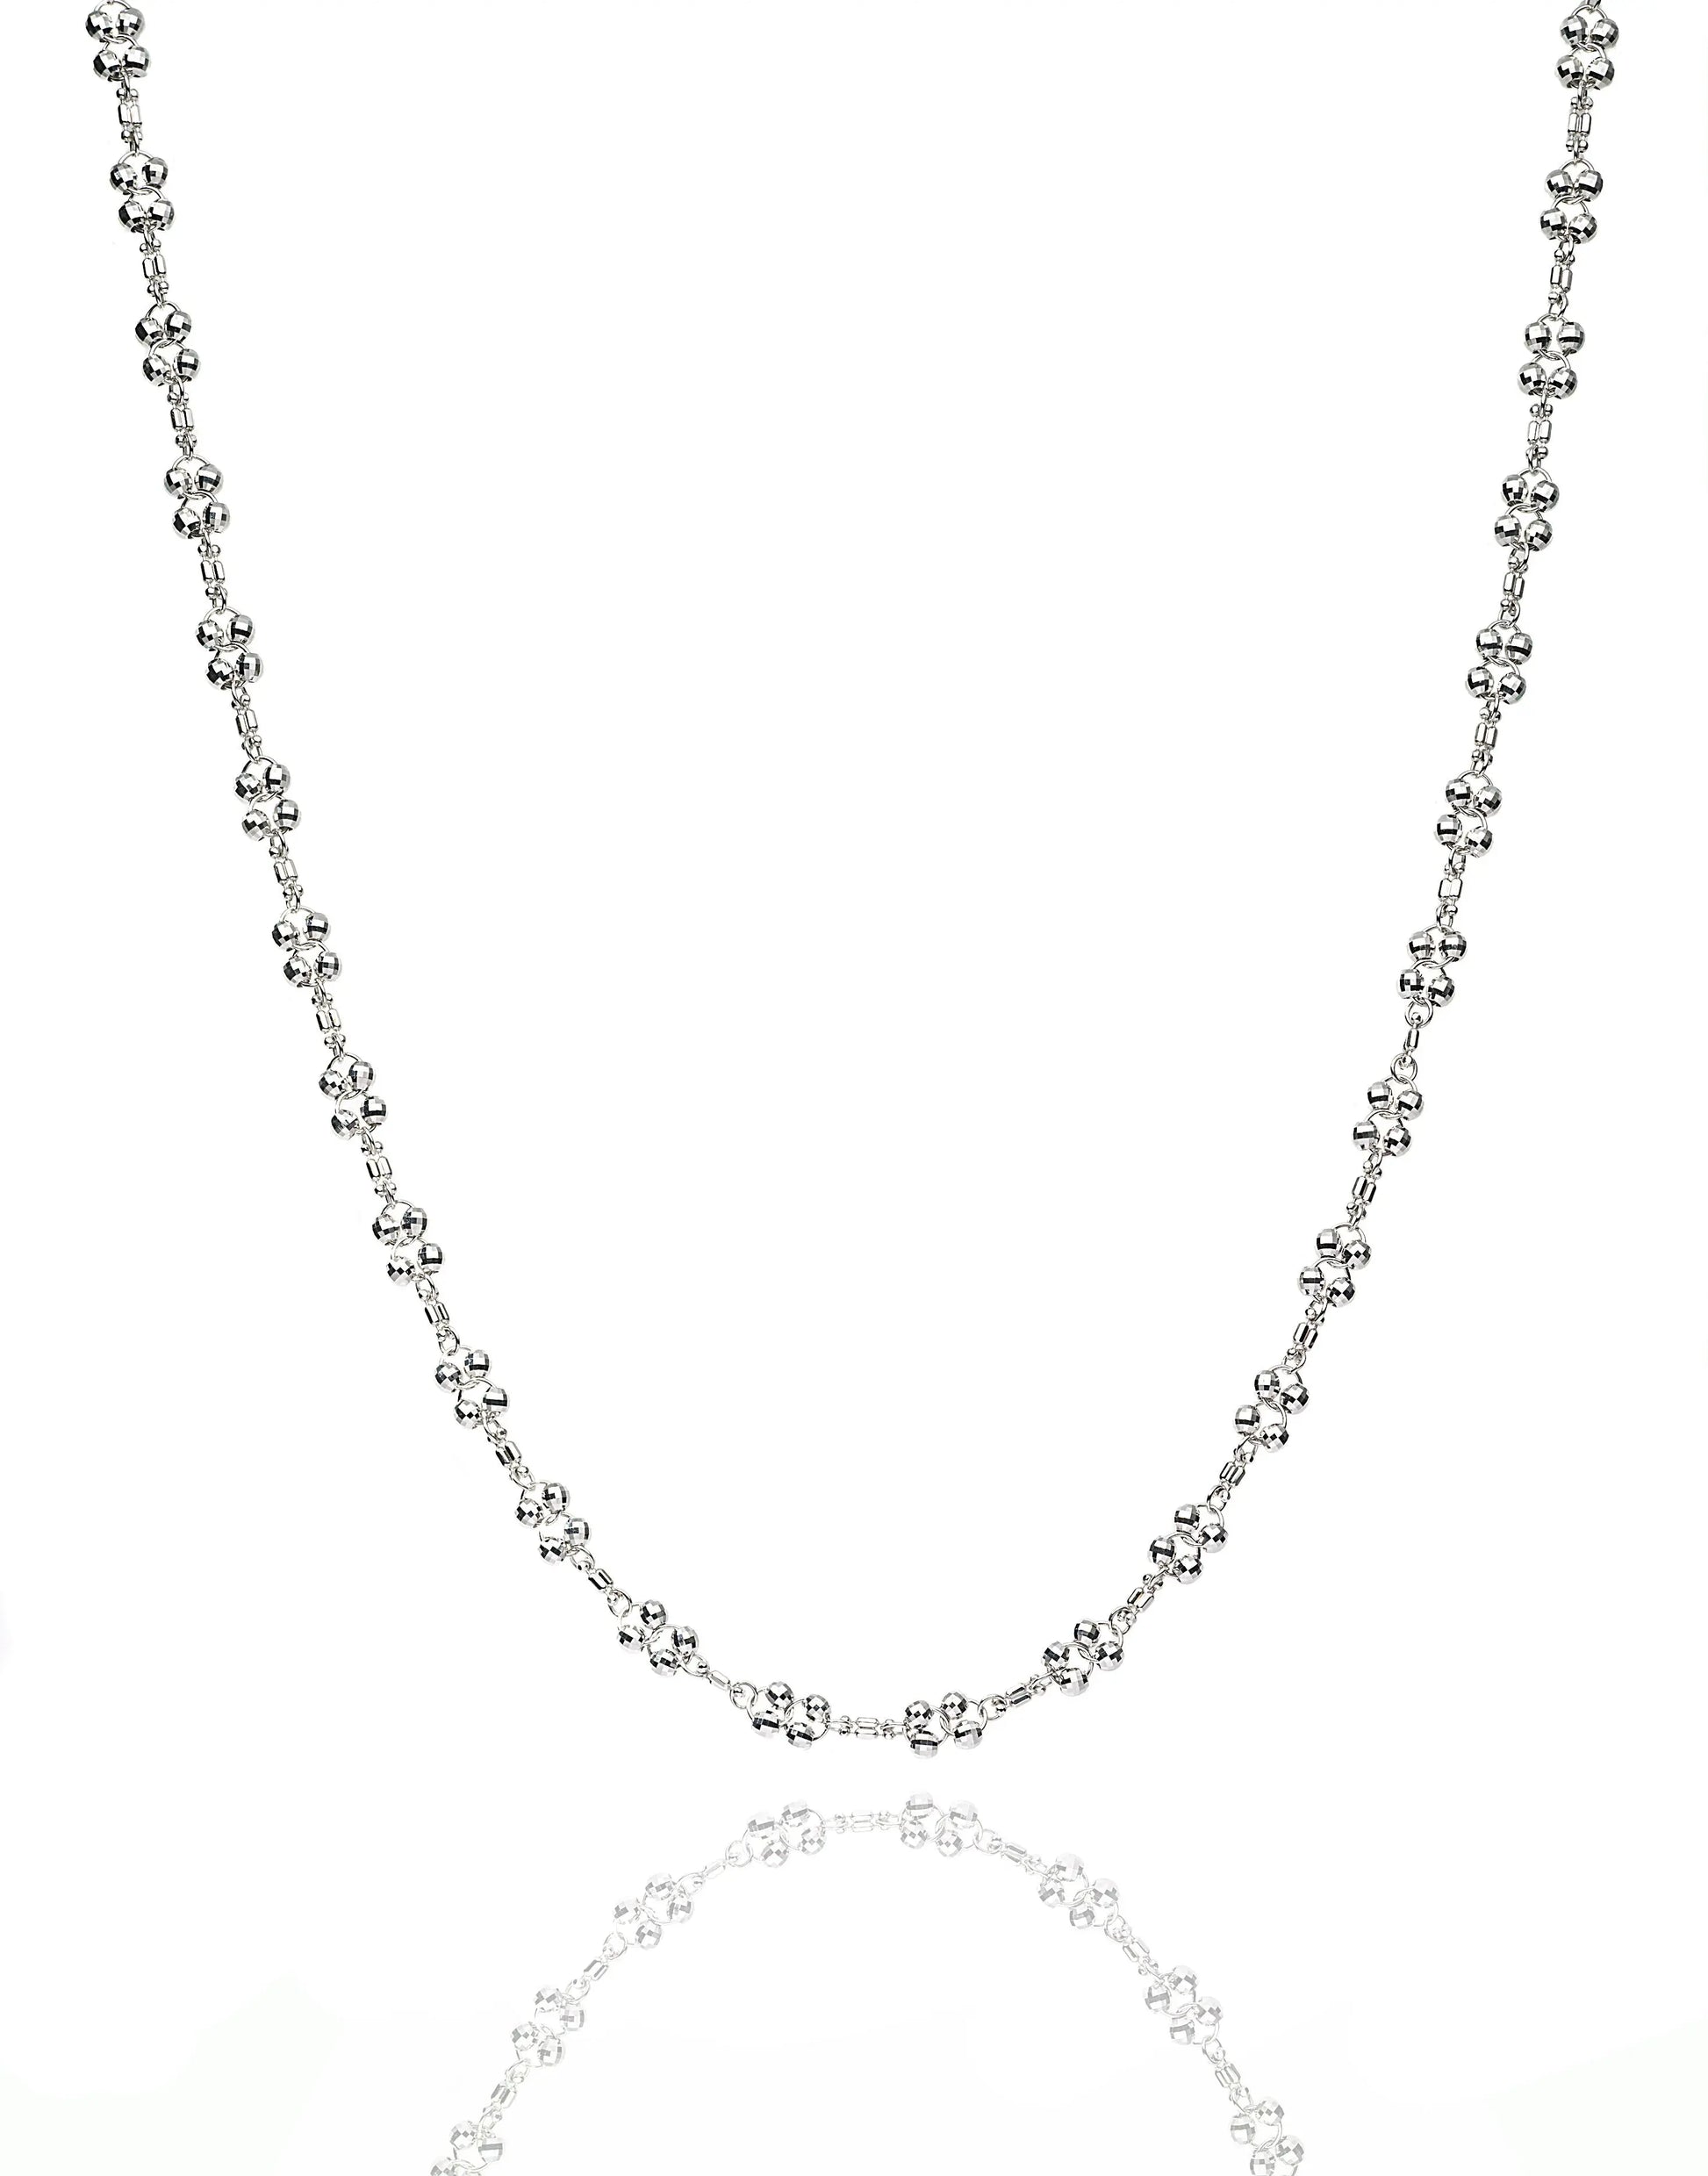 Florette Platinum Necklace. Designed by Platinum Born 